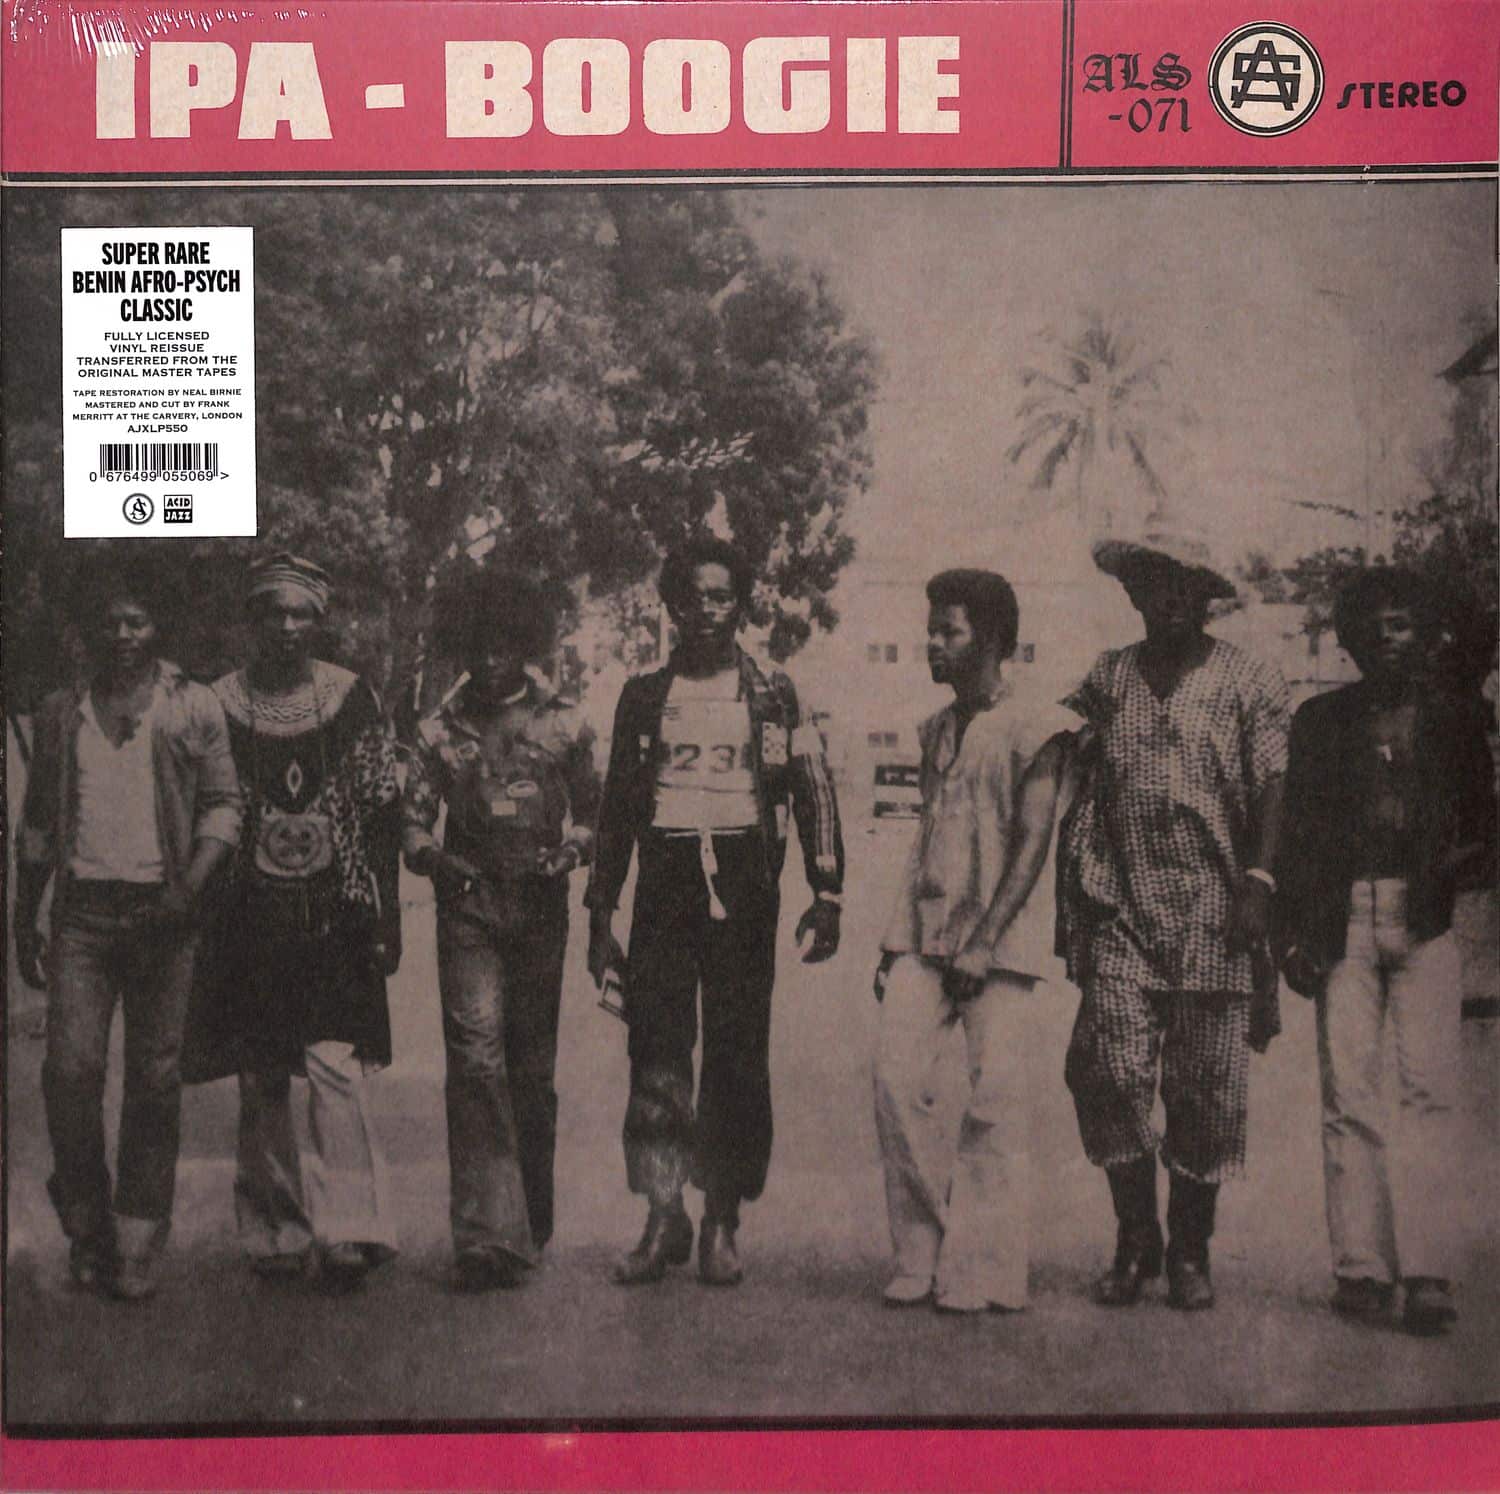 Ipa-boogie - IPA-BOOGIE 